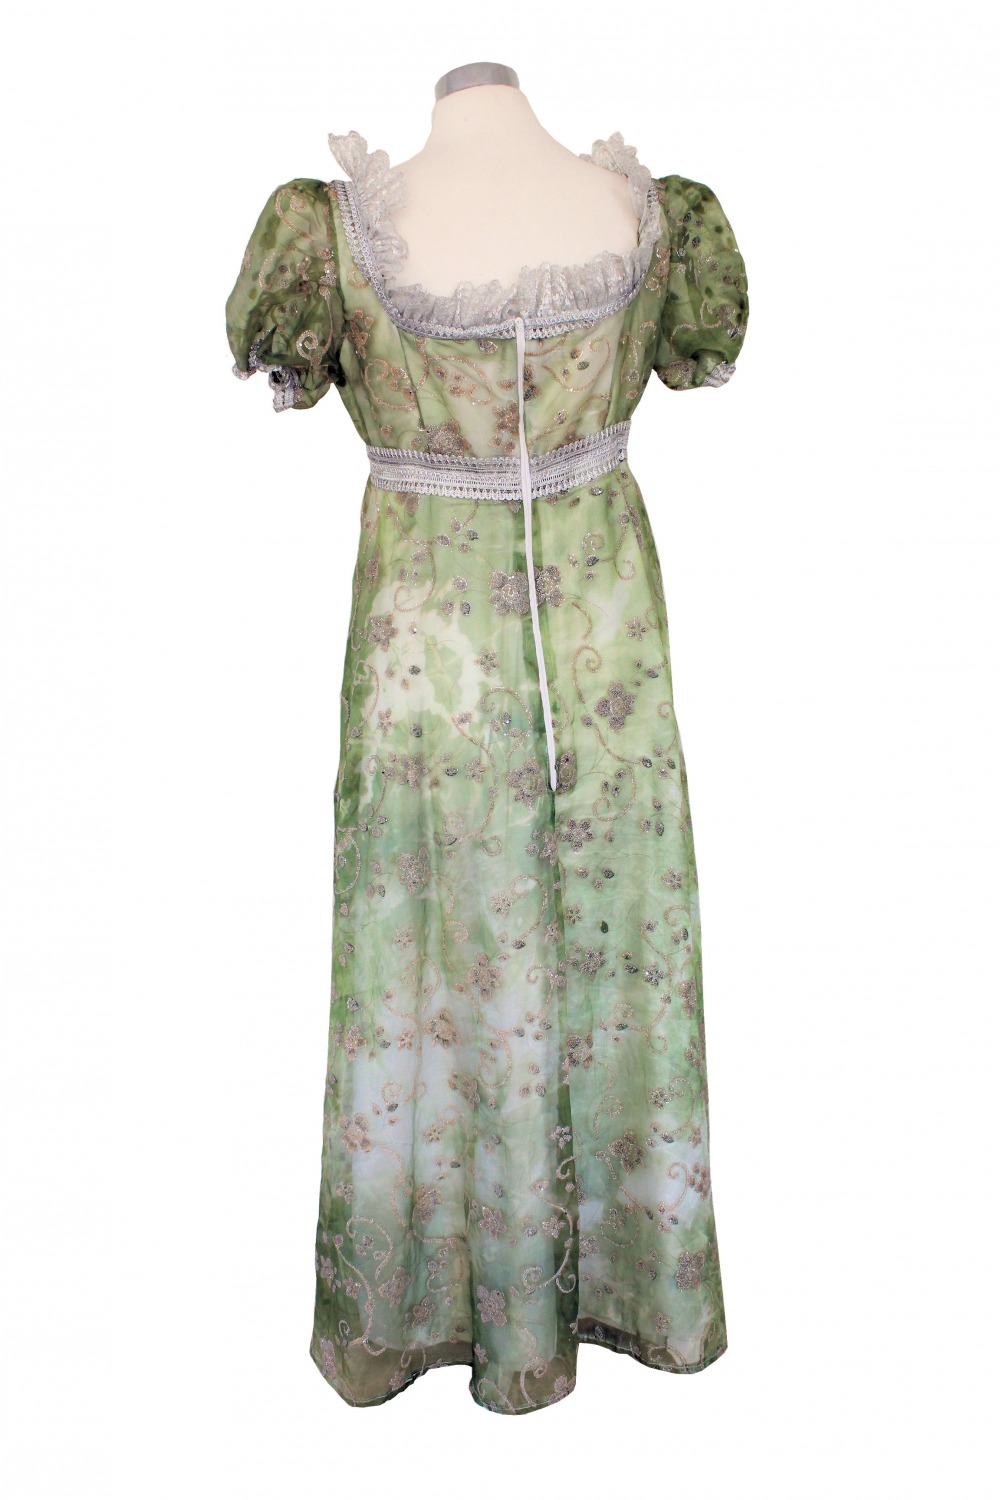 Ladies Regency Day Costume Evening Ballgown Costume Size 10 - 12 ...